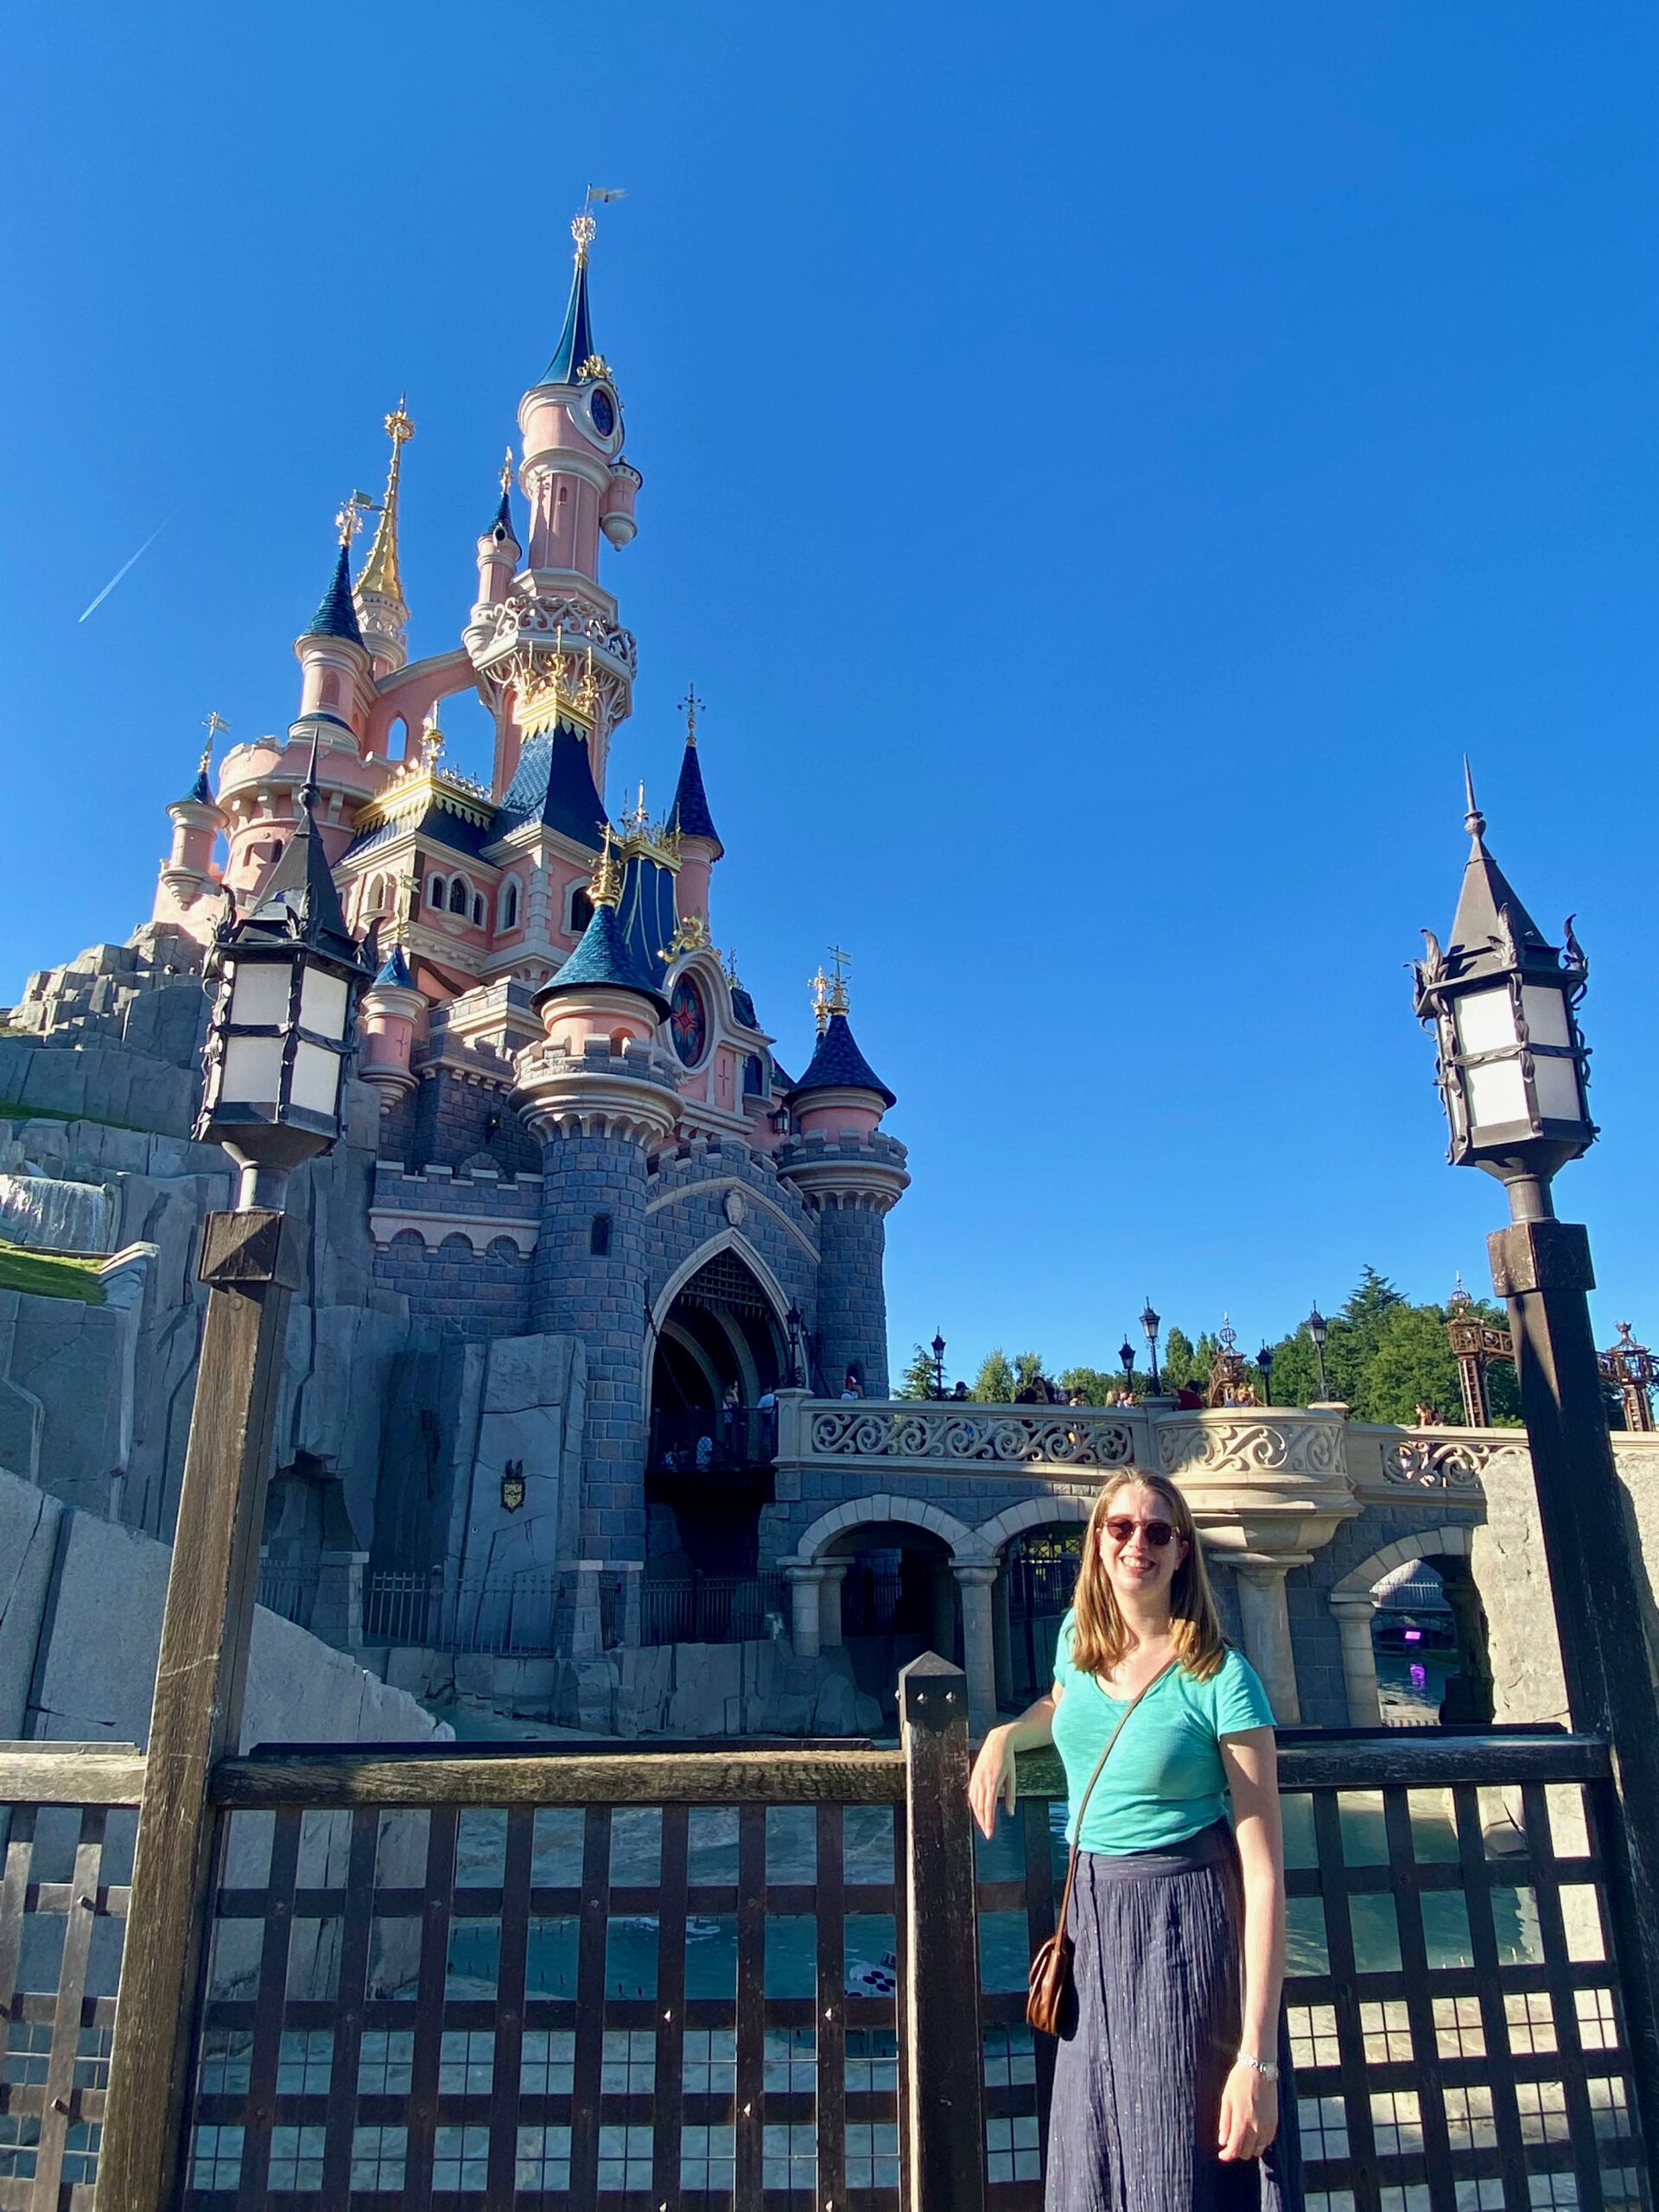 New Disney Princess and Sleeping Beauty Castle Bags at Disneyland Resort -  Disneyland News Today